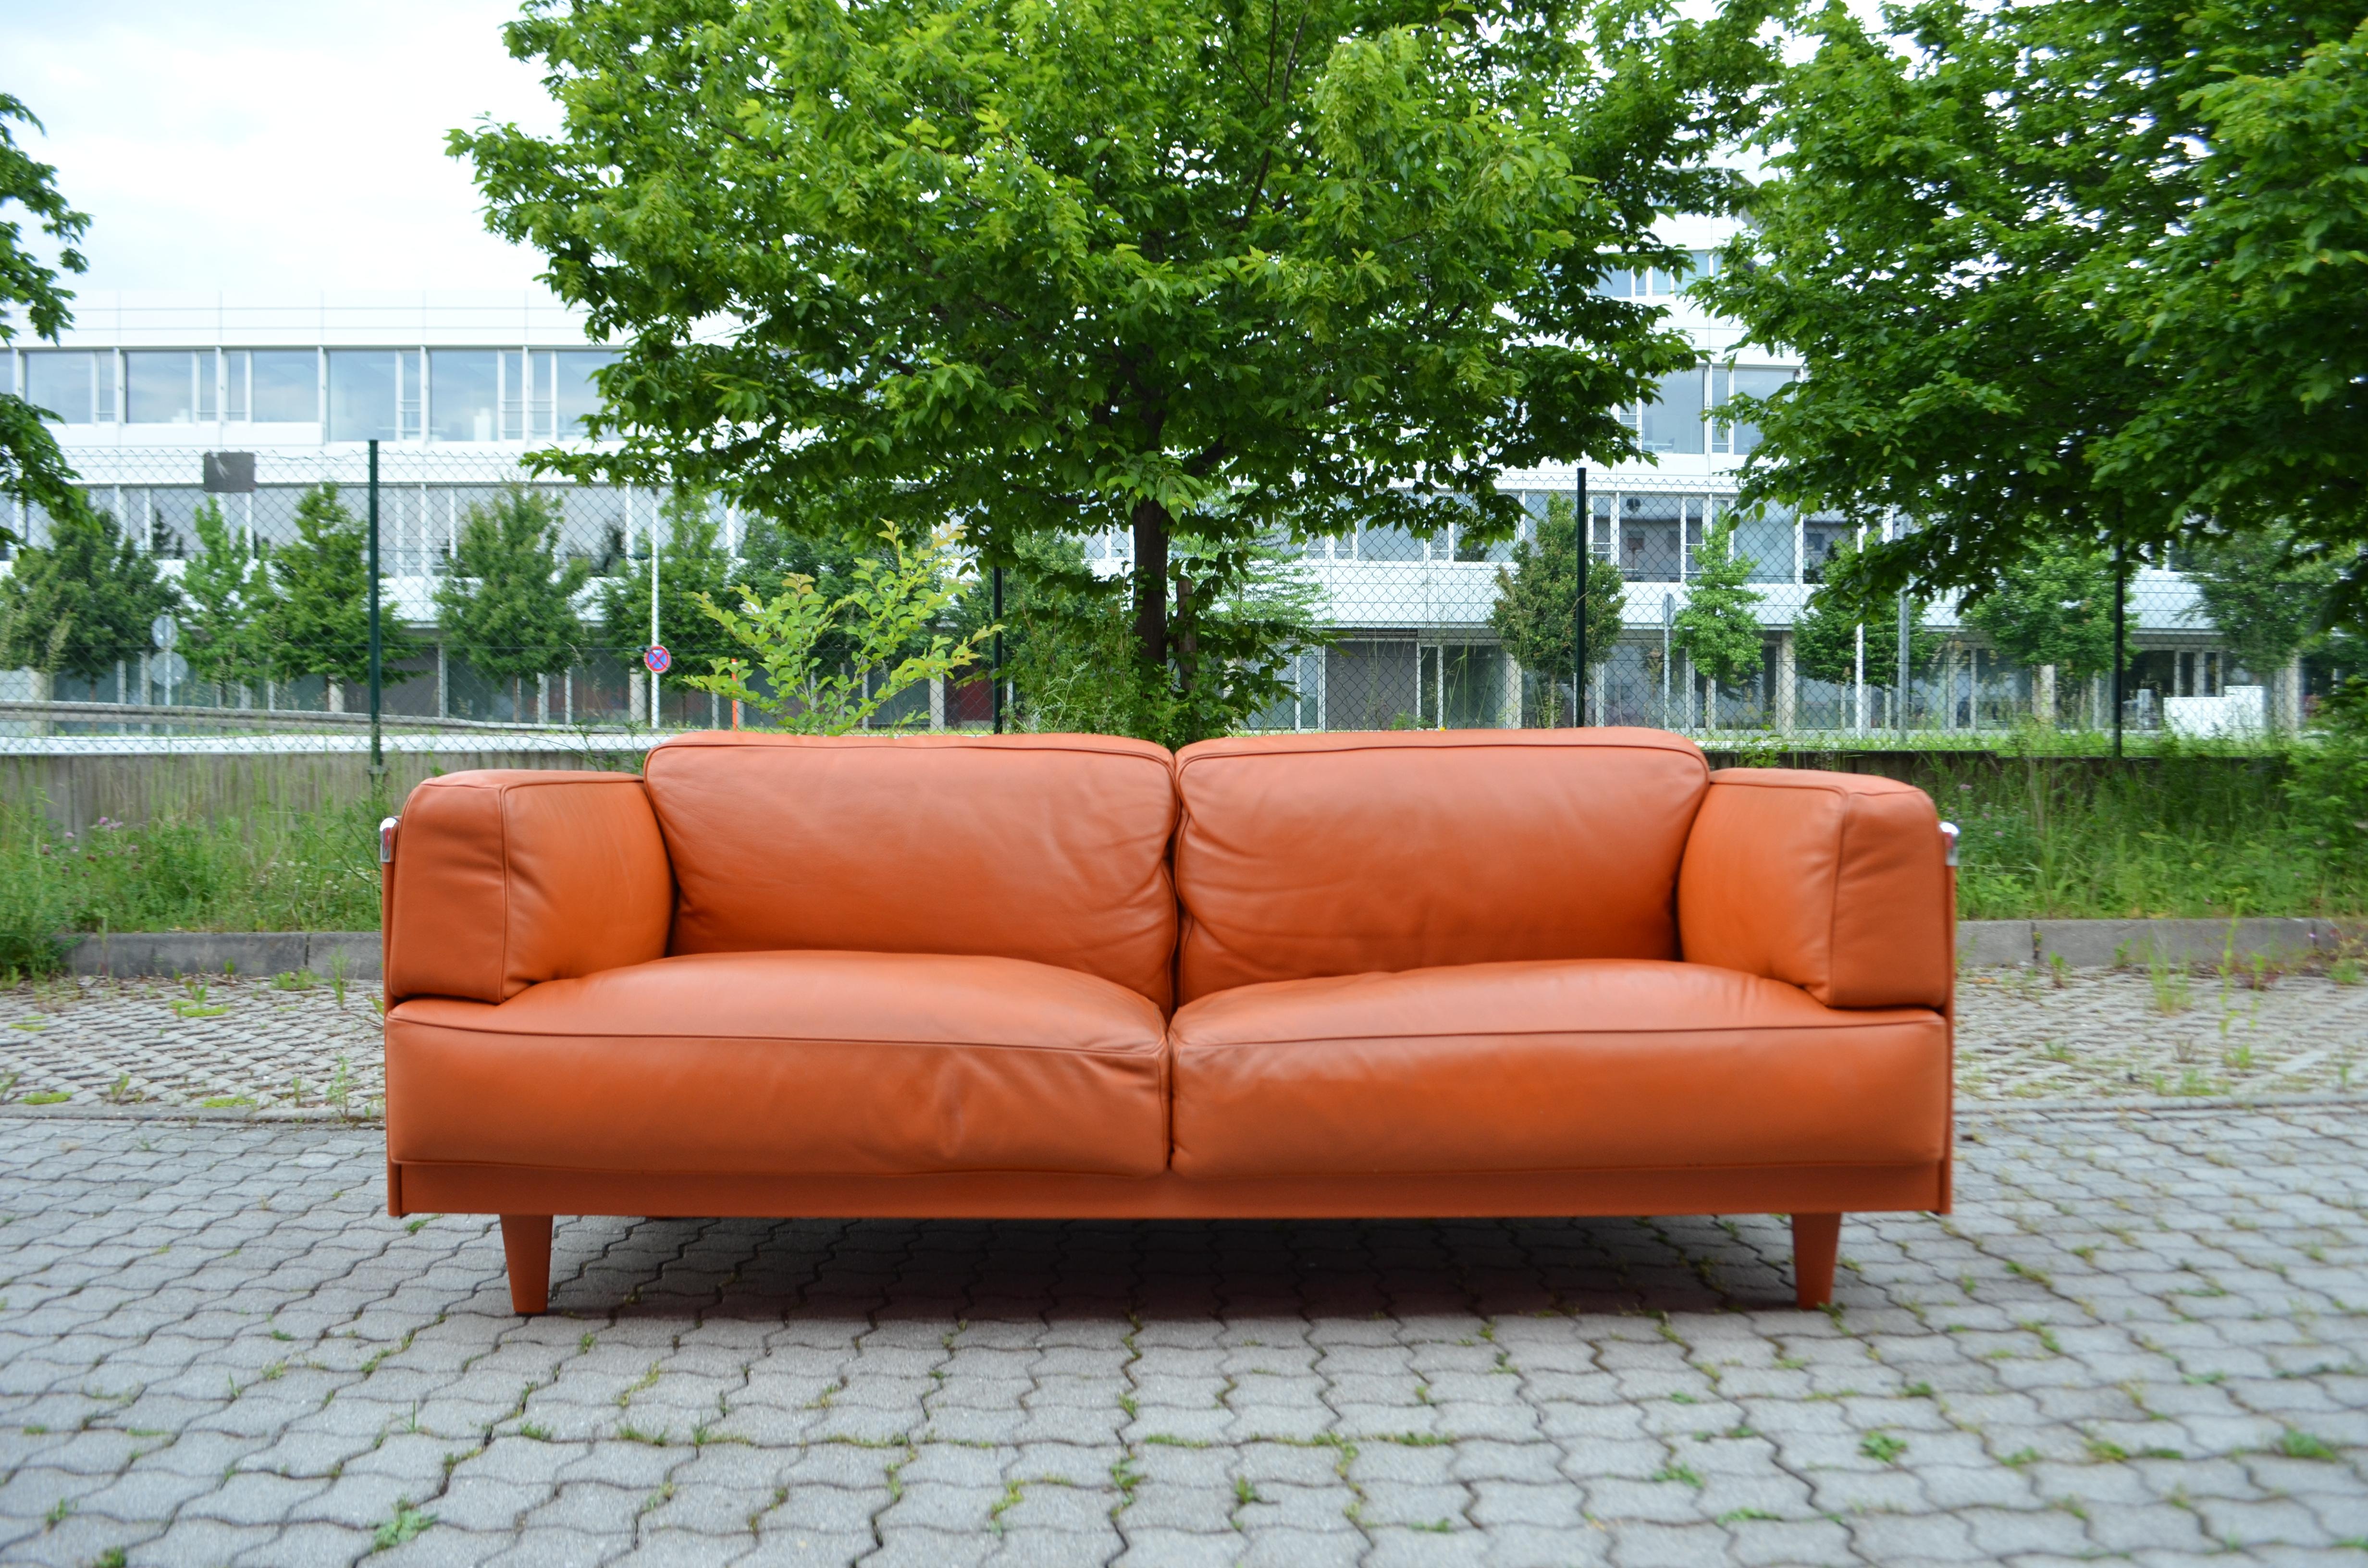 Italian architect Pierluigi Cerri design this Classic Sofa for Poltrona Frau.
This modell 